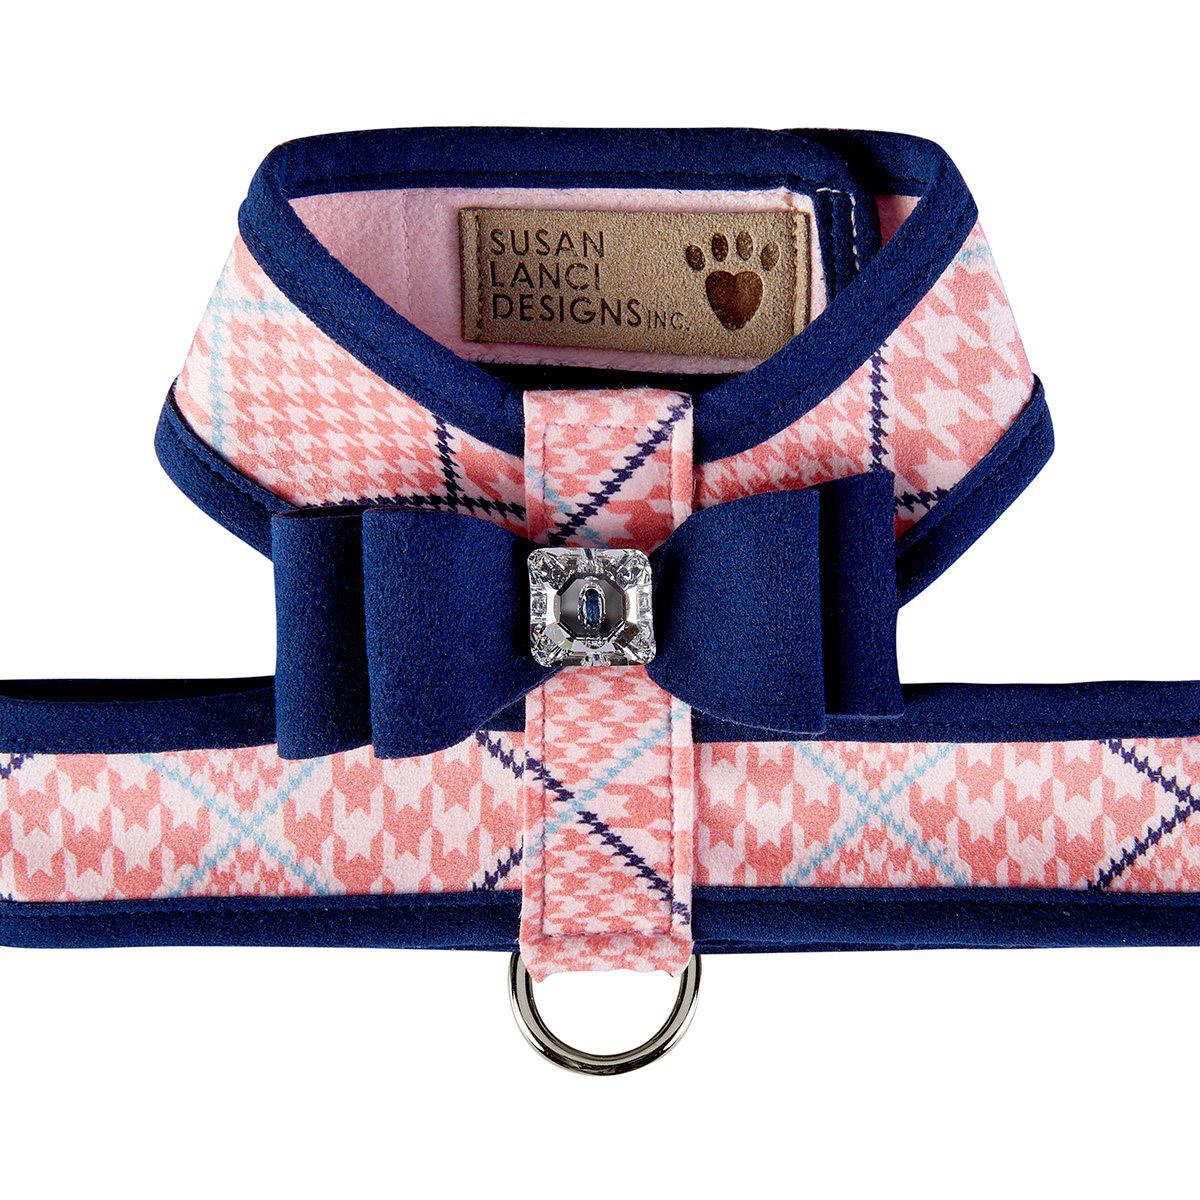 Peaches N' Cream Glen Houndstooth Tinkie Dog Harness with Big Bow and Trim by Susan Lanci - Indigo